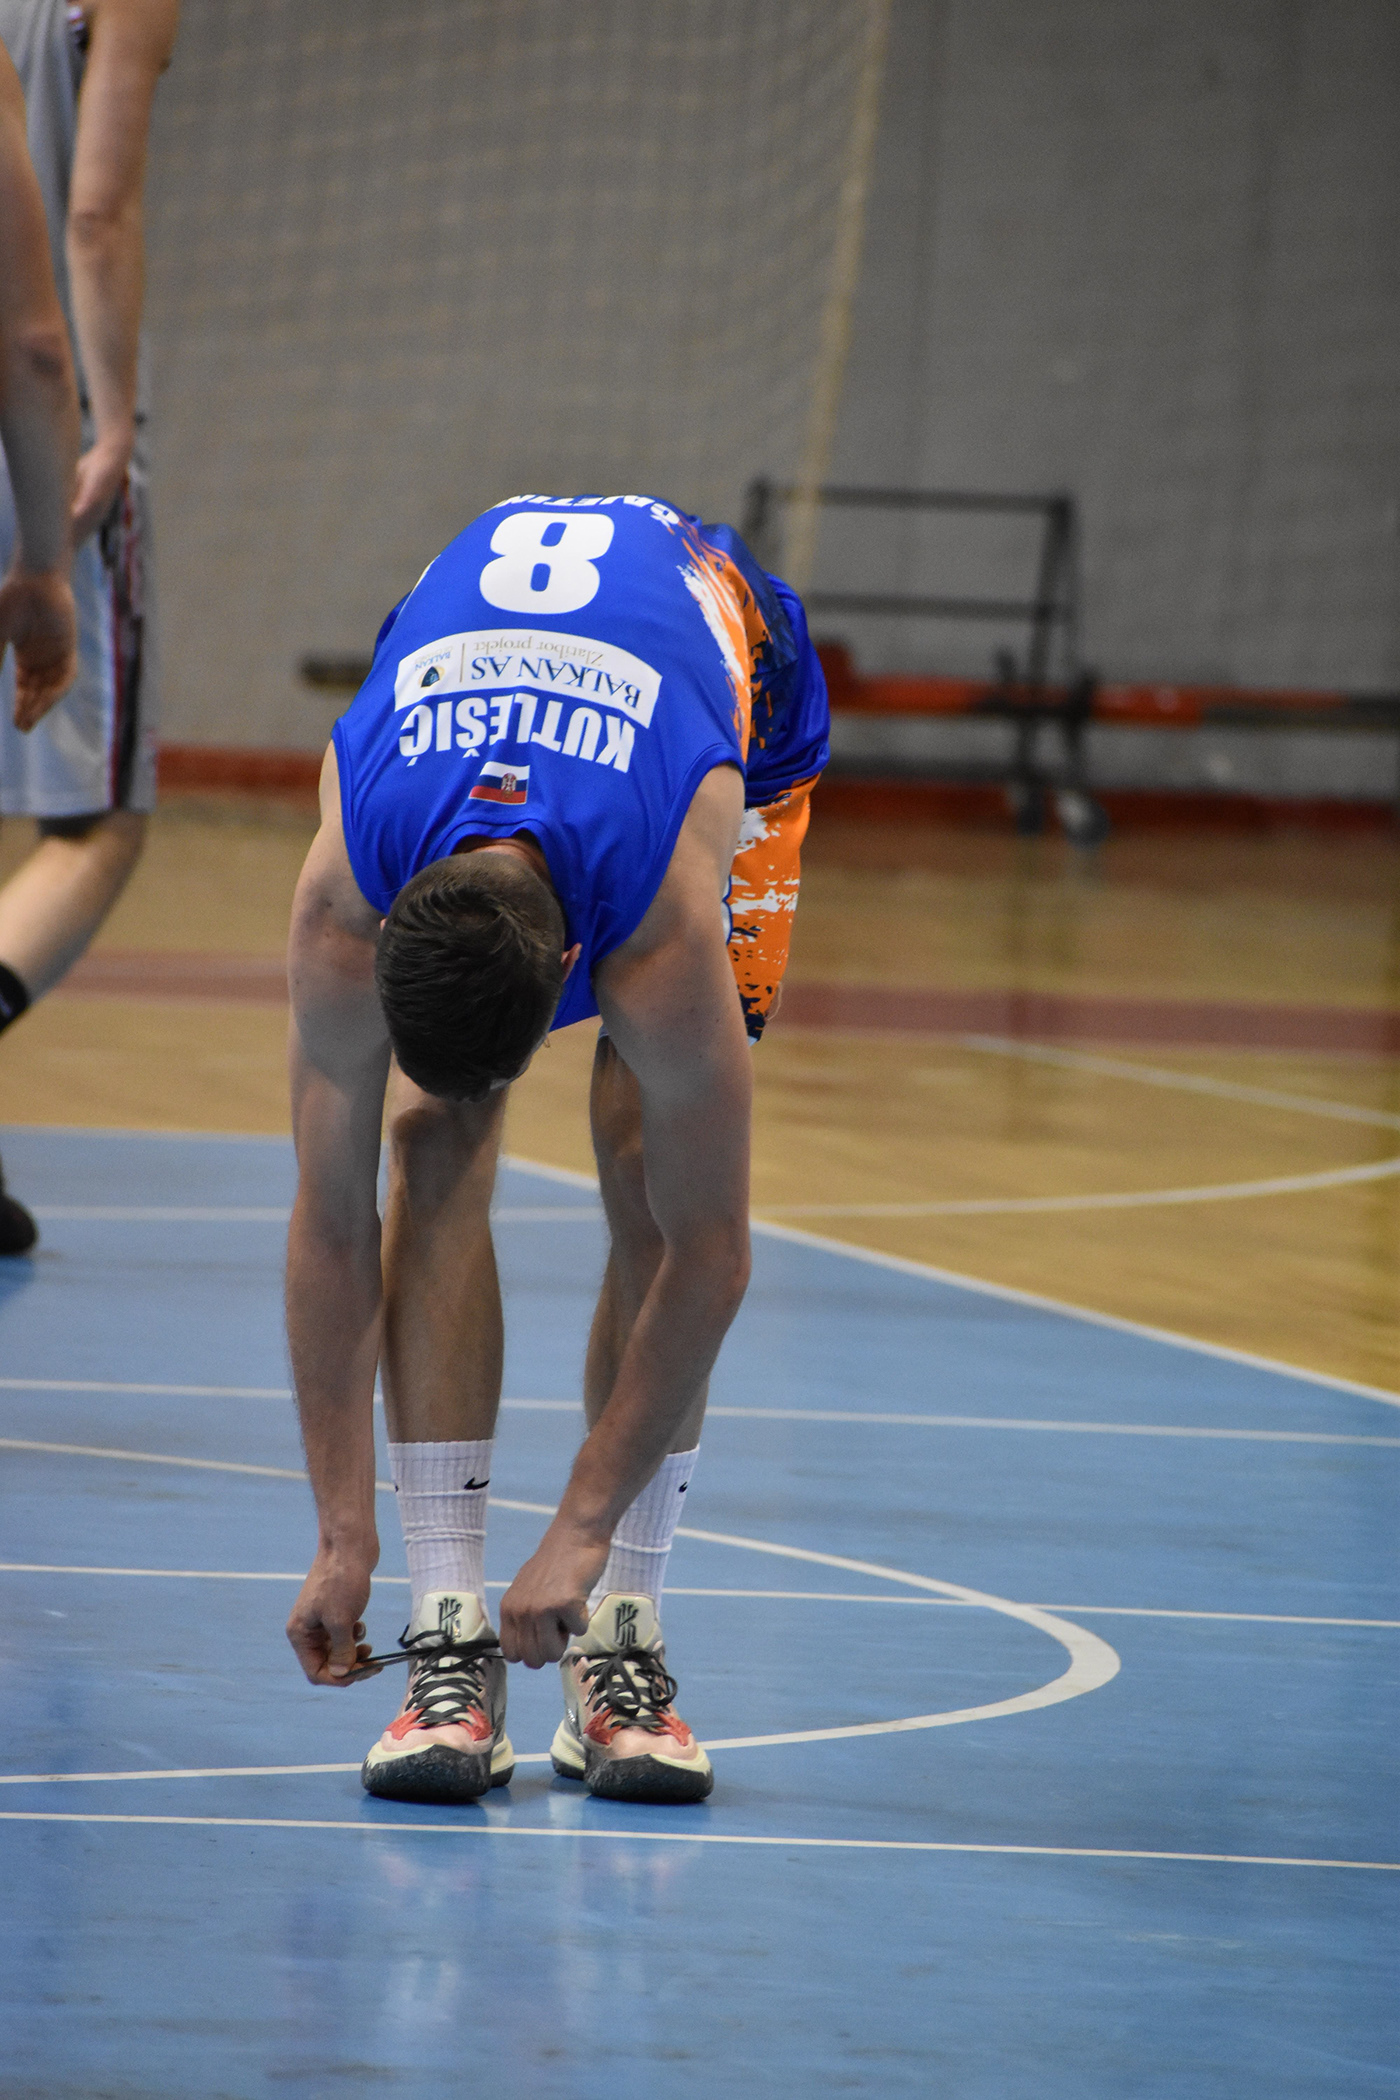 basketball kls Košarkaška liga Srbije Kragujevac Nikon D3500 radnicki kragujevac sports zlatibor